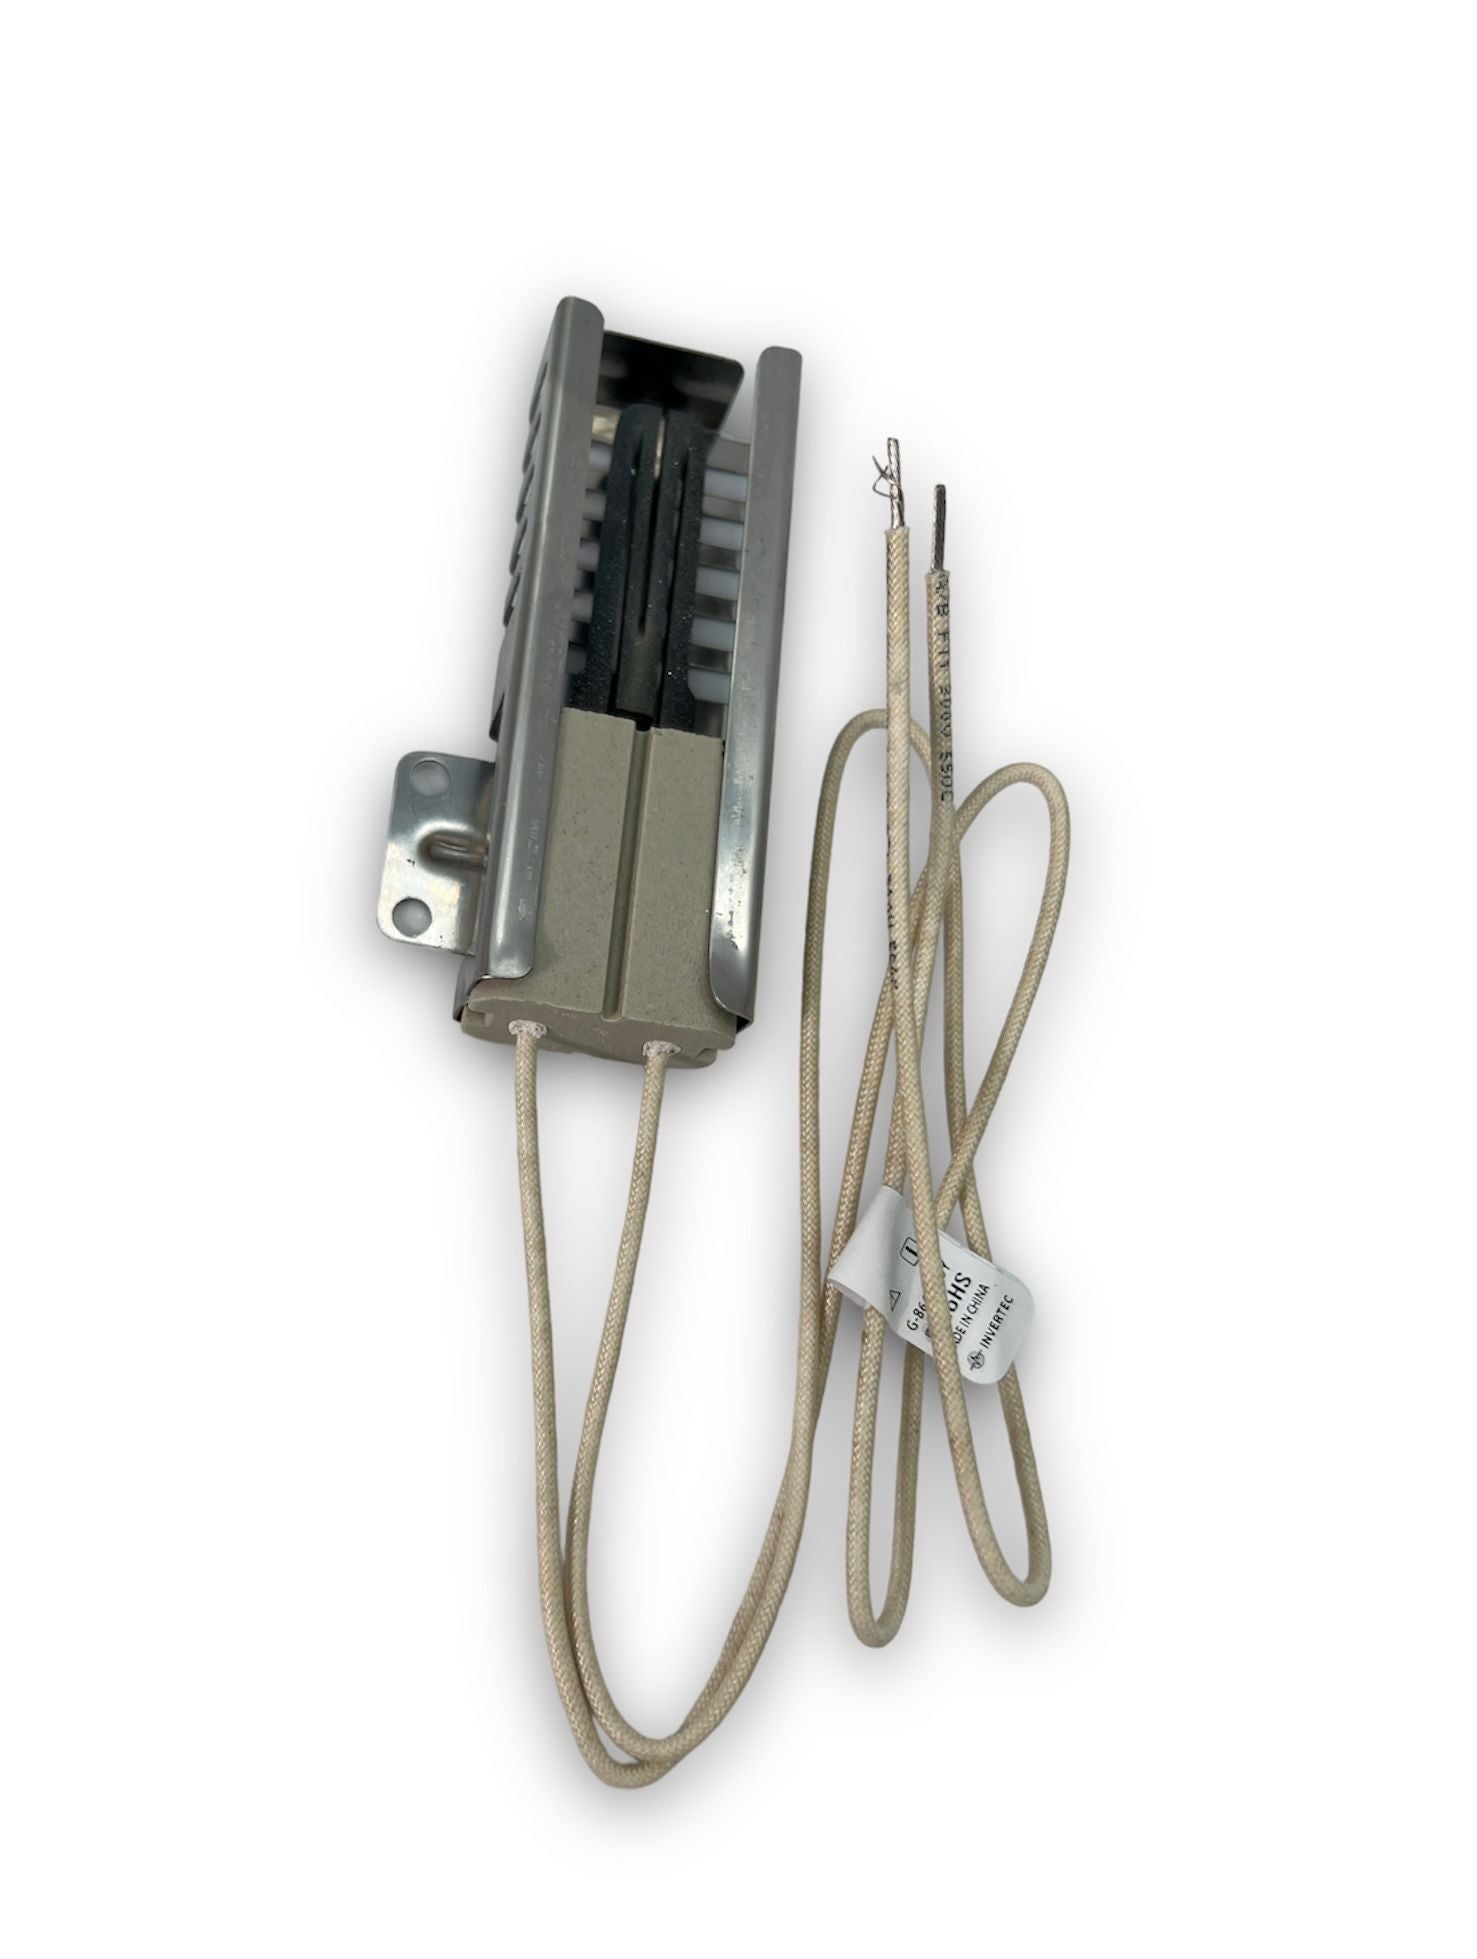 Professional Range Broil Igniter Kit - DVTH-5316, Replaces: DVTH5316 INVERTEC